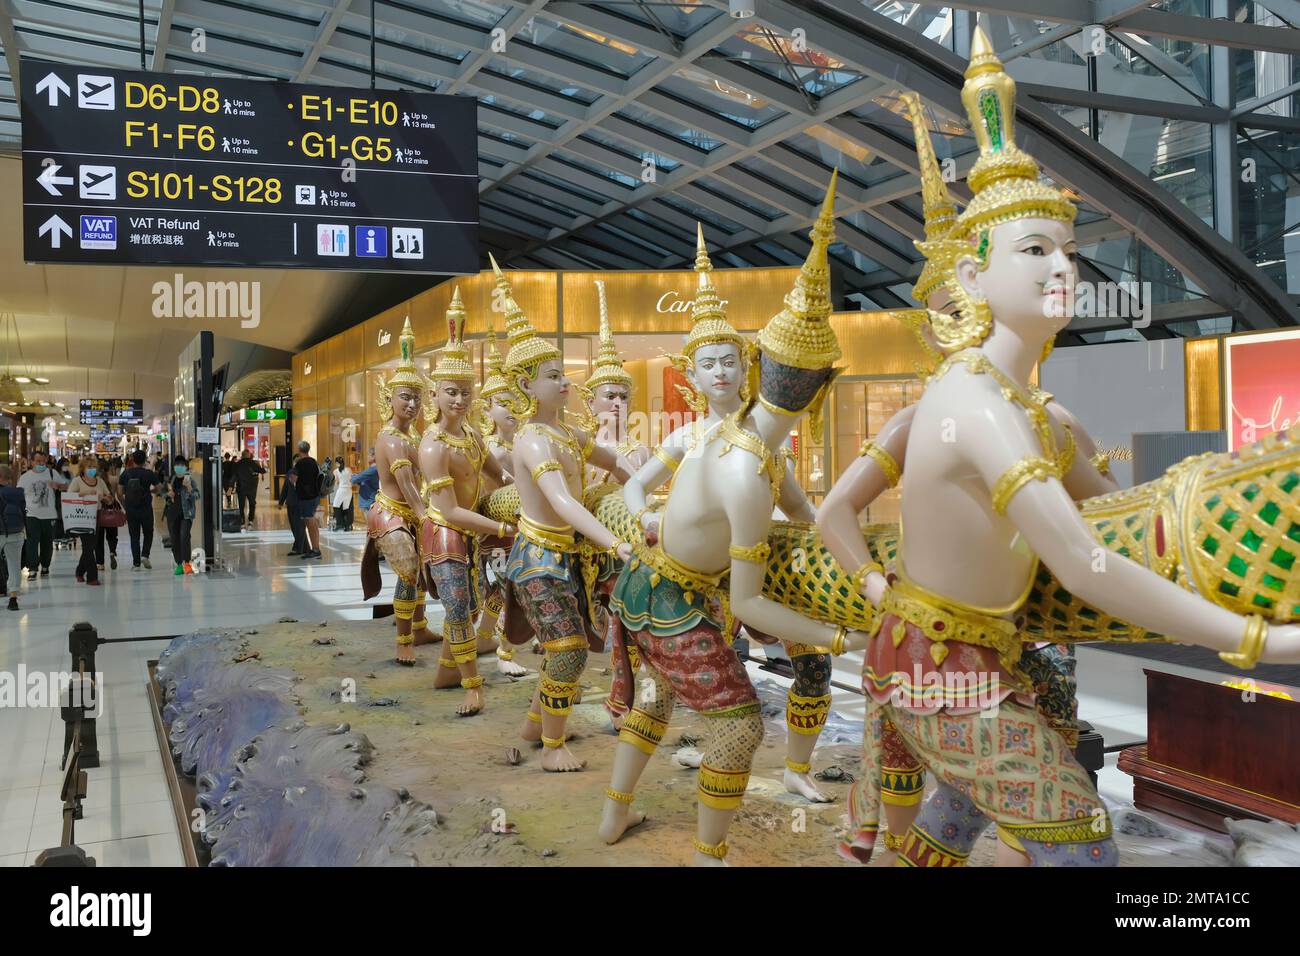 Classical statues in Bangkok's main airport Suivarnabhumi. Stock Photo